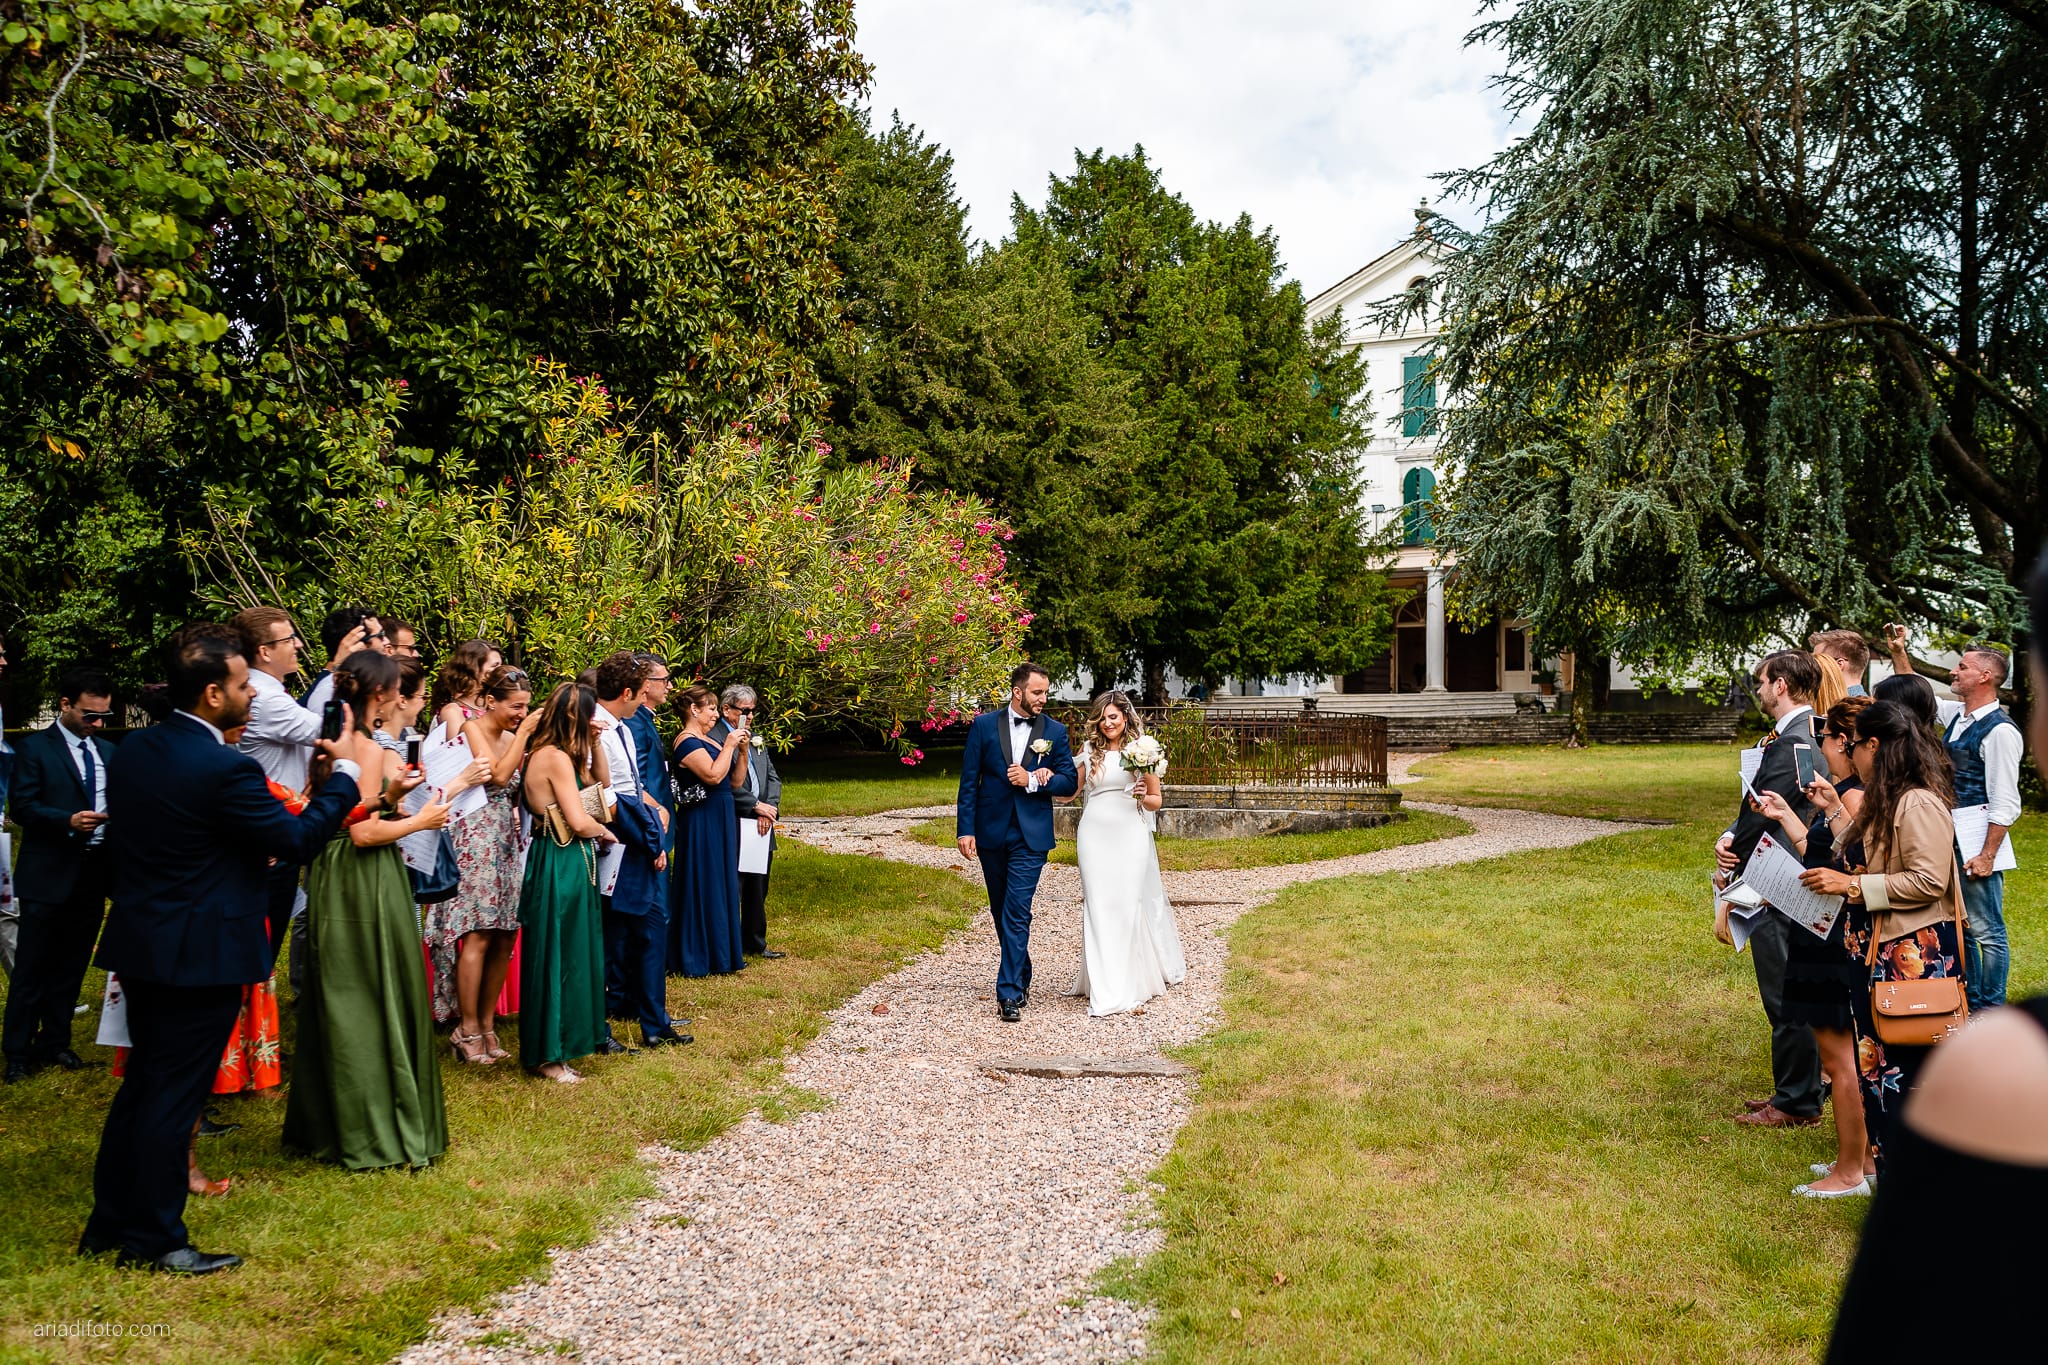 Mariana Nicholas Matrimonio da Sogno a Castelvecchio Sagrado Gorizia cerimonia all'aperto ingresso sposi